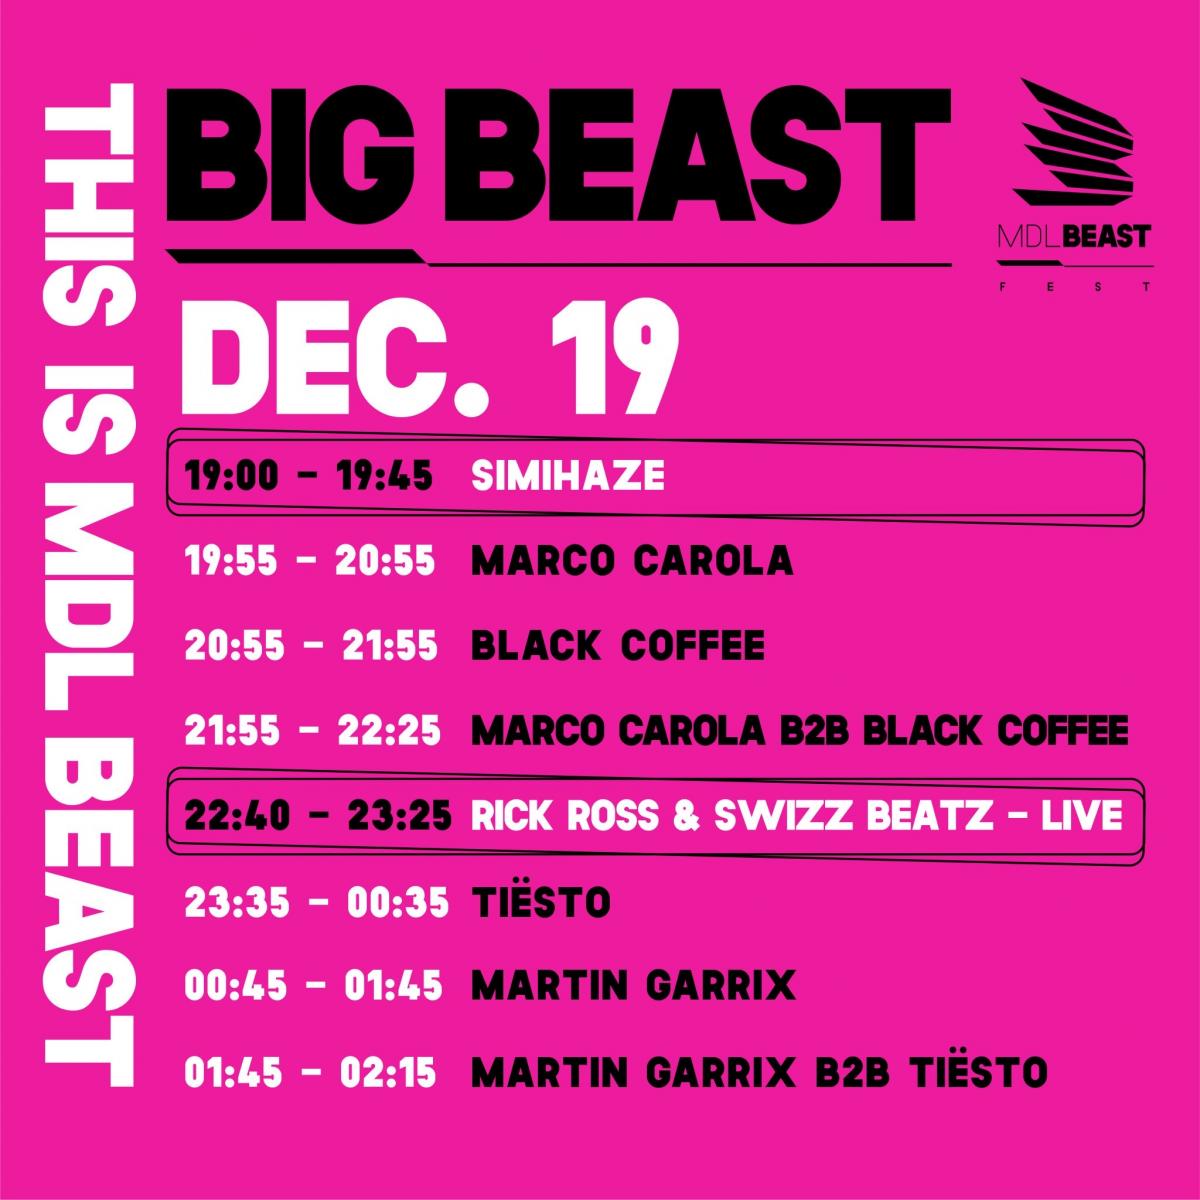 MDL beast schedule